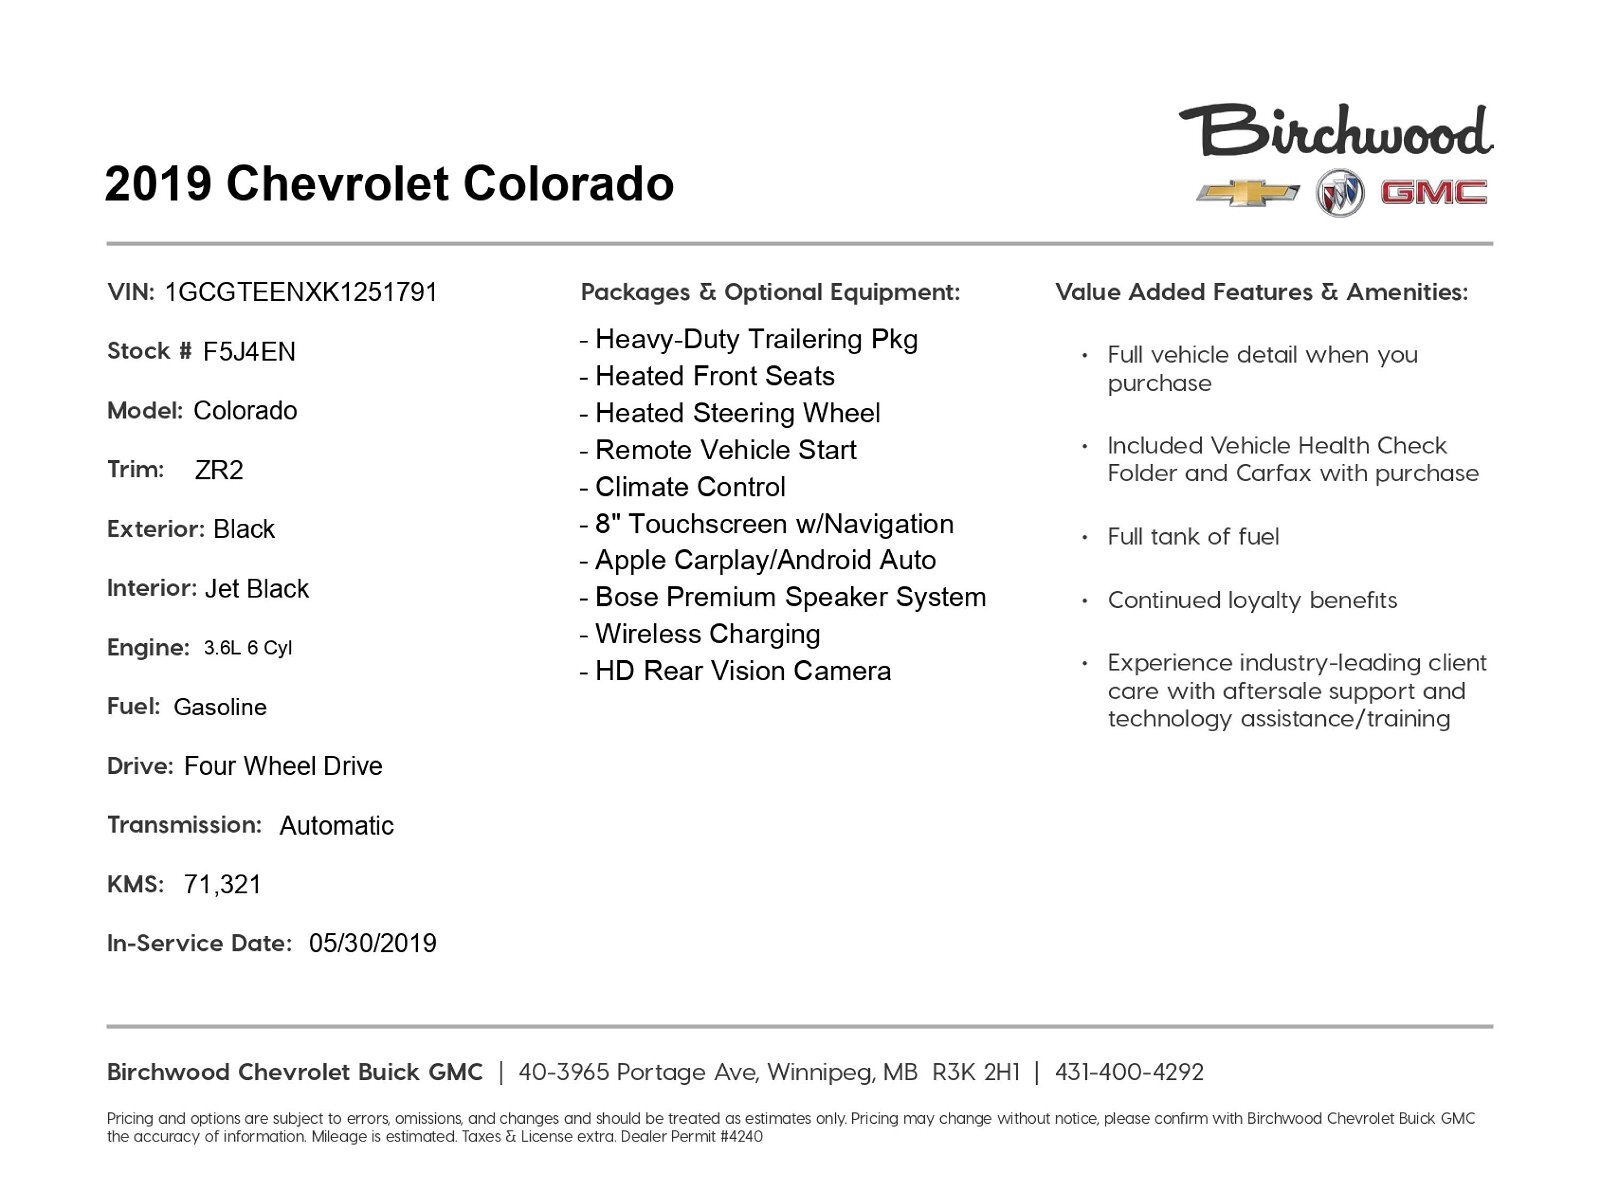 2019 Chevrolet Colorado 4WD ZR2 2-year Maintenance Free!